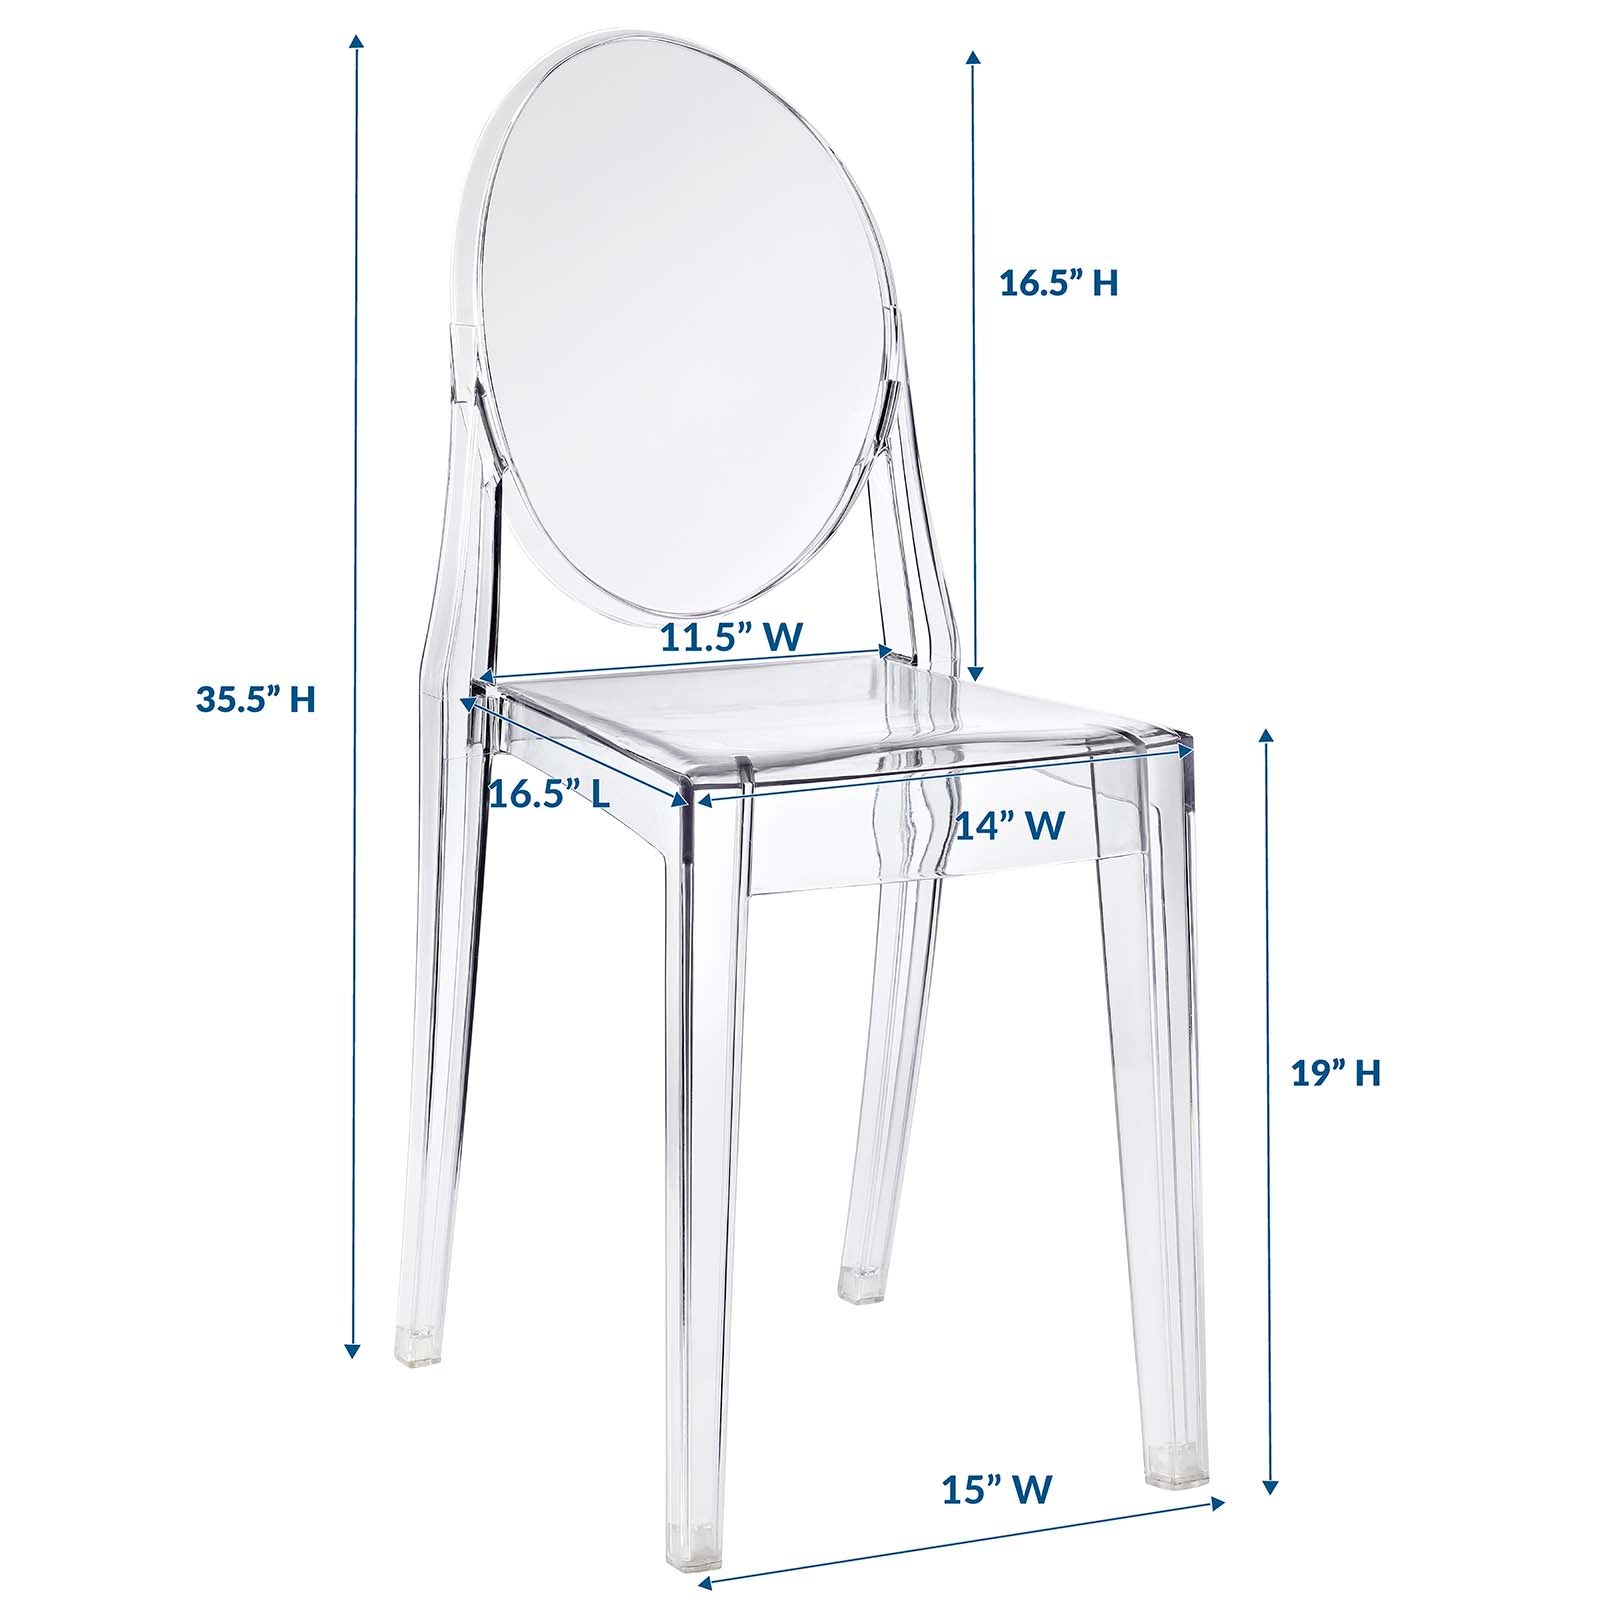 Casper Dining Side Chair - Clear